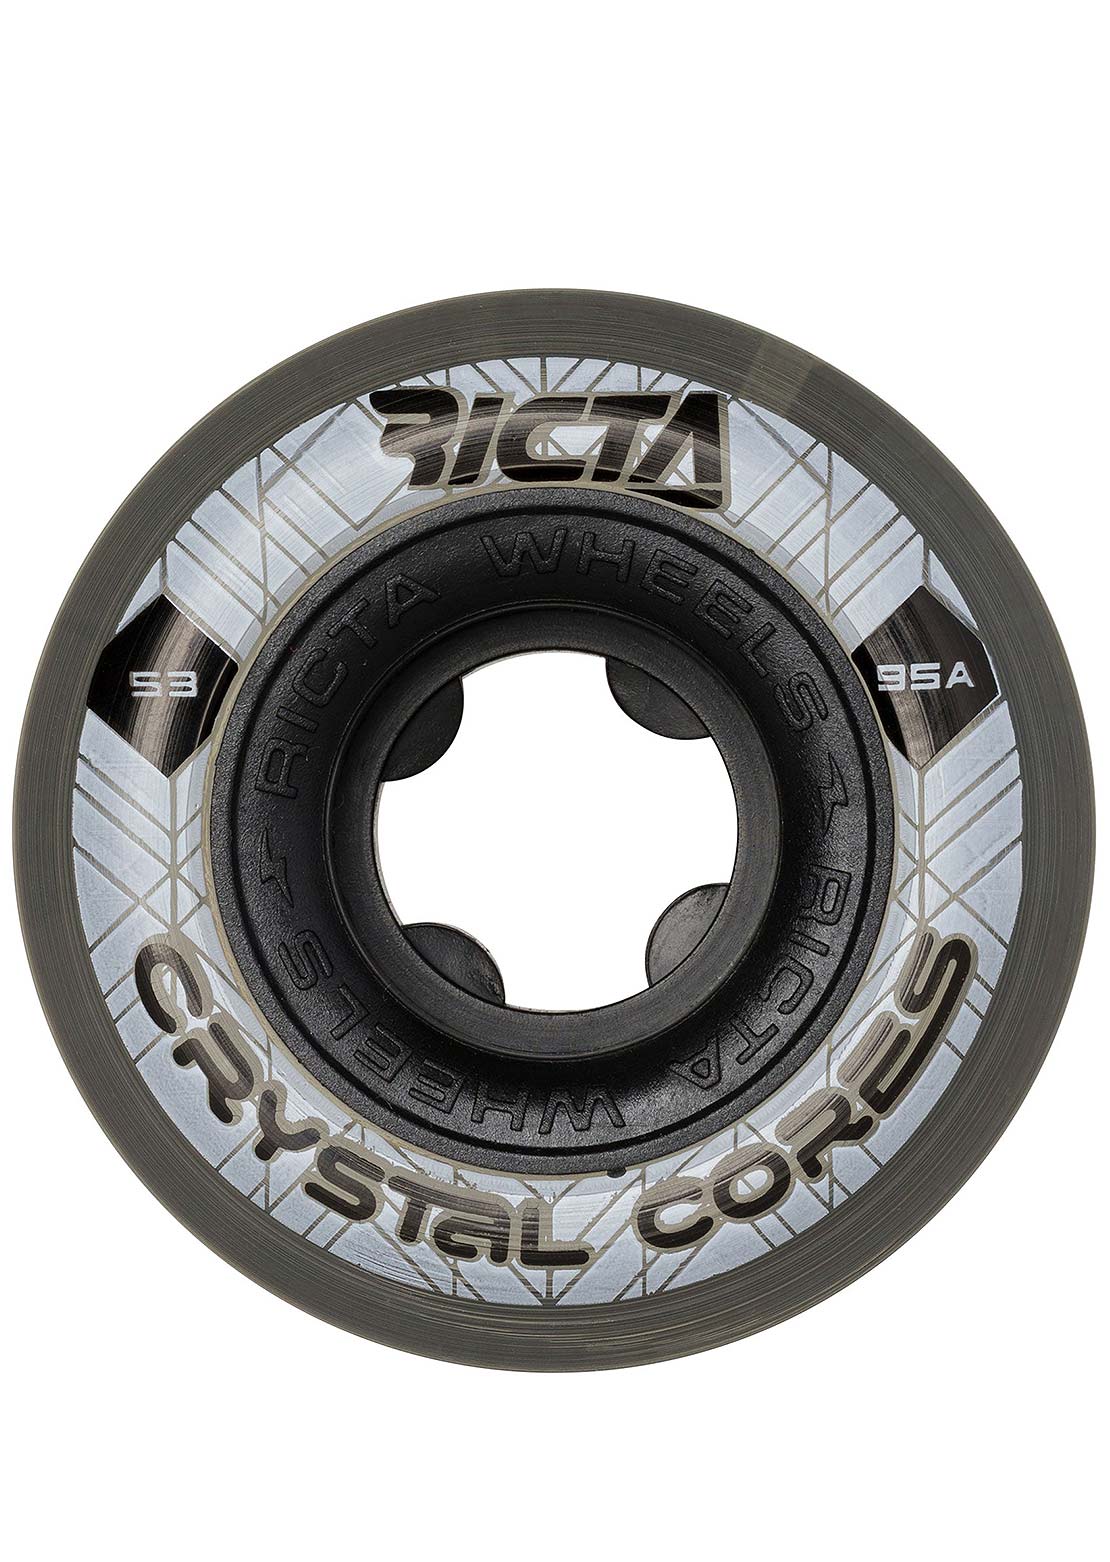 Ricta Crystal Cores 95A Skateboard Wheels 53 mm